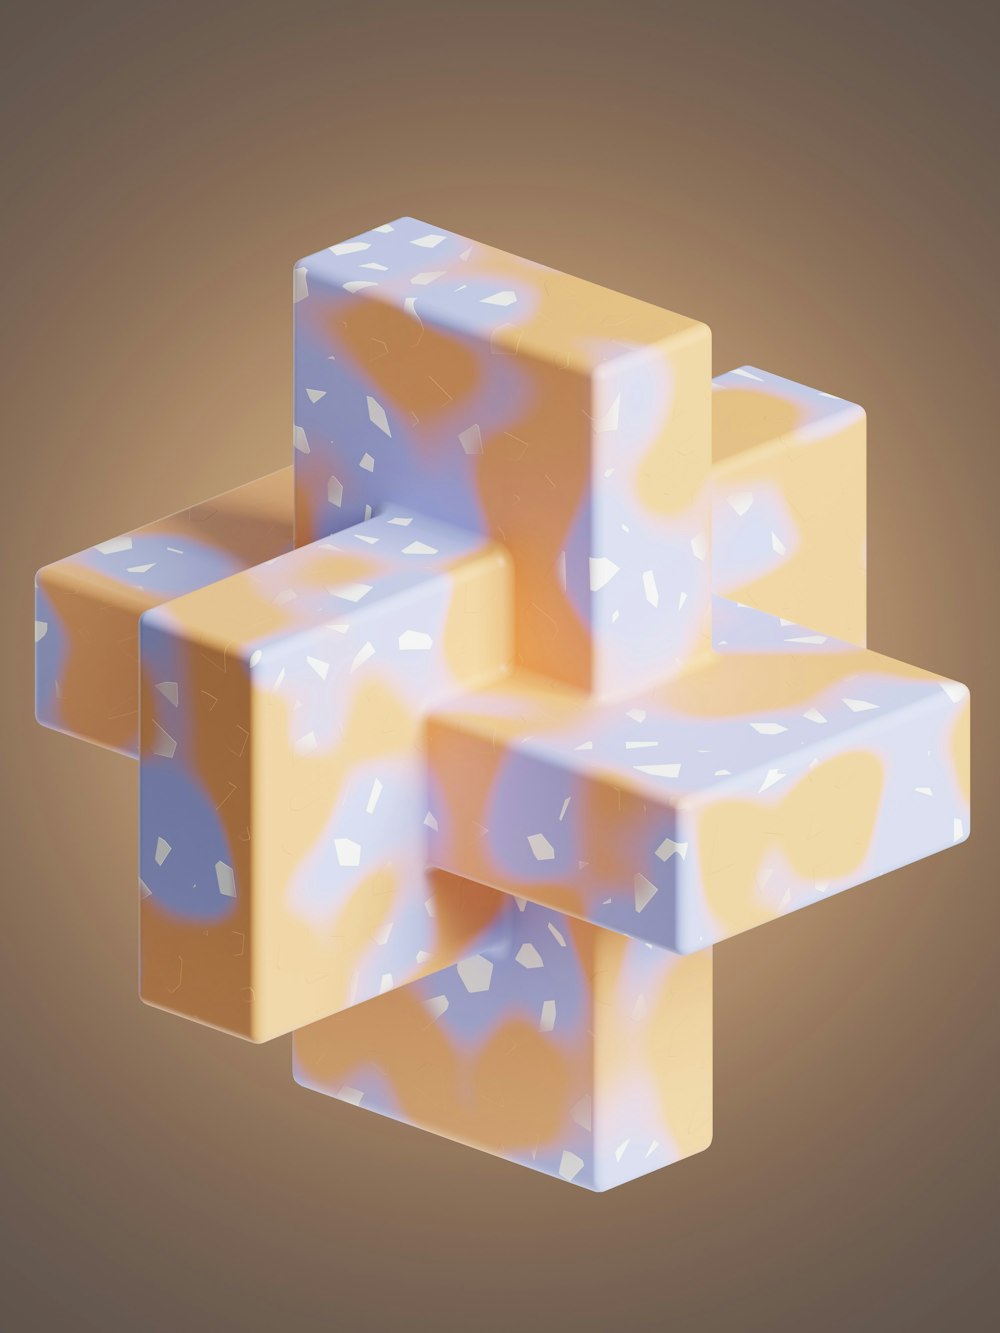 a stylized image of three blocks of soap